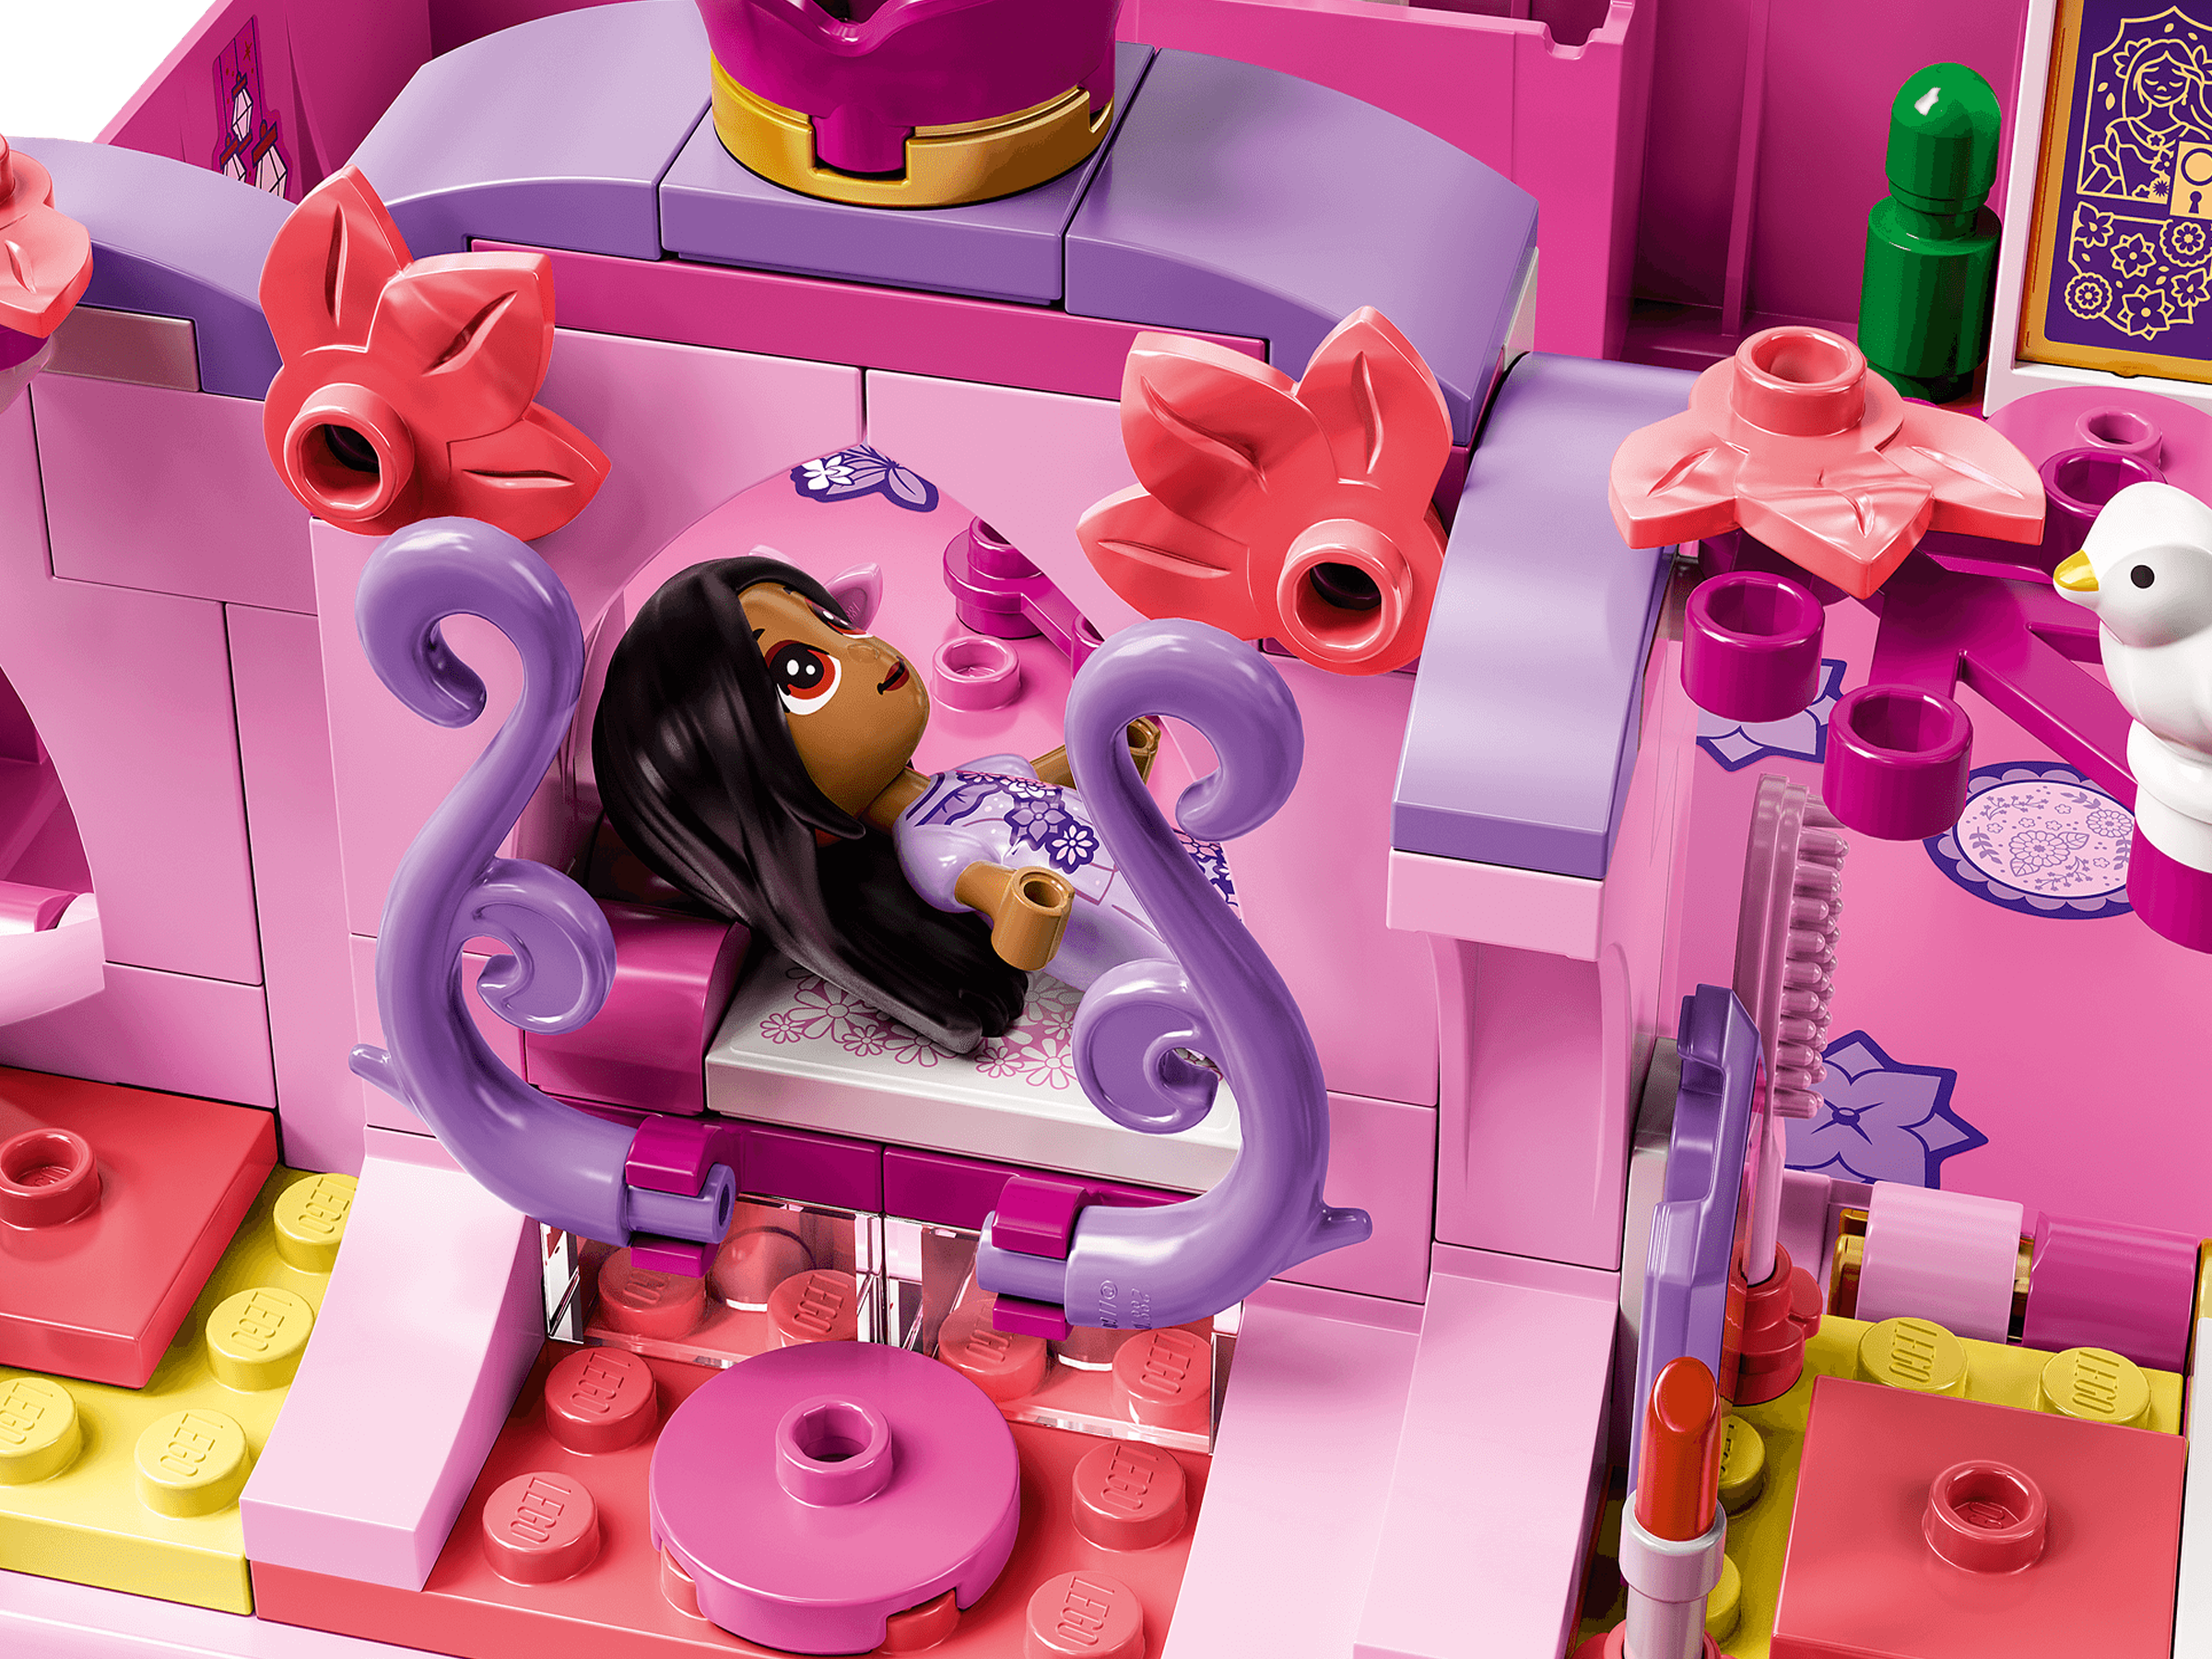 LEGO Disney Encanto Isabela's Magical Door Set 43201